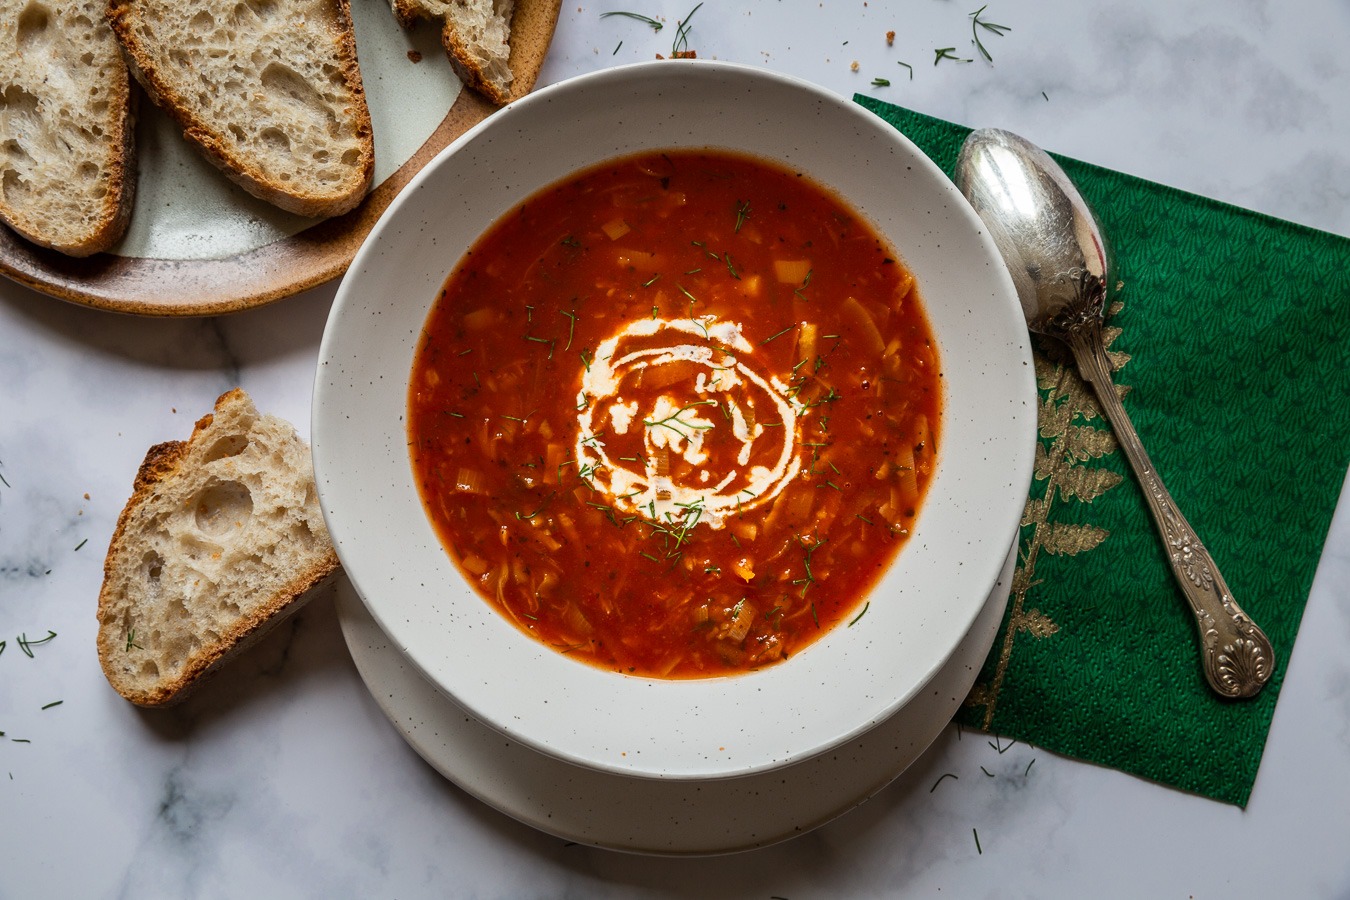 Vegan Pomidorowa (Tomato soup)